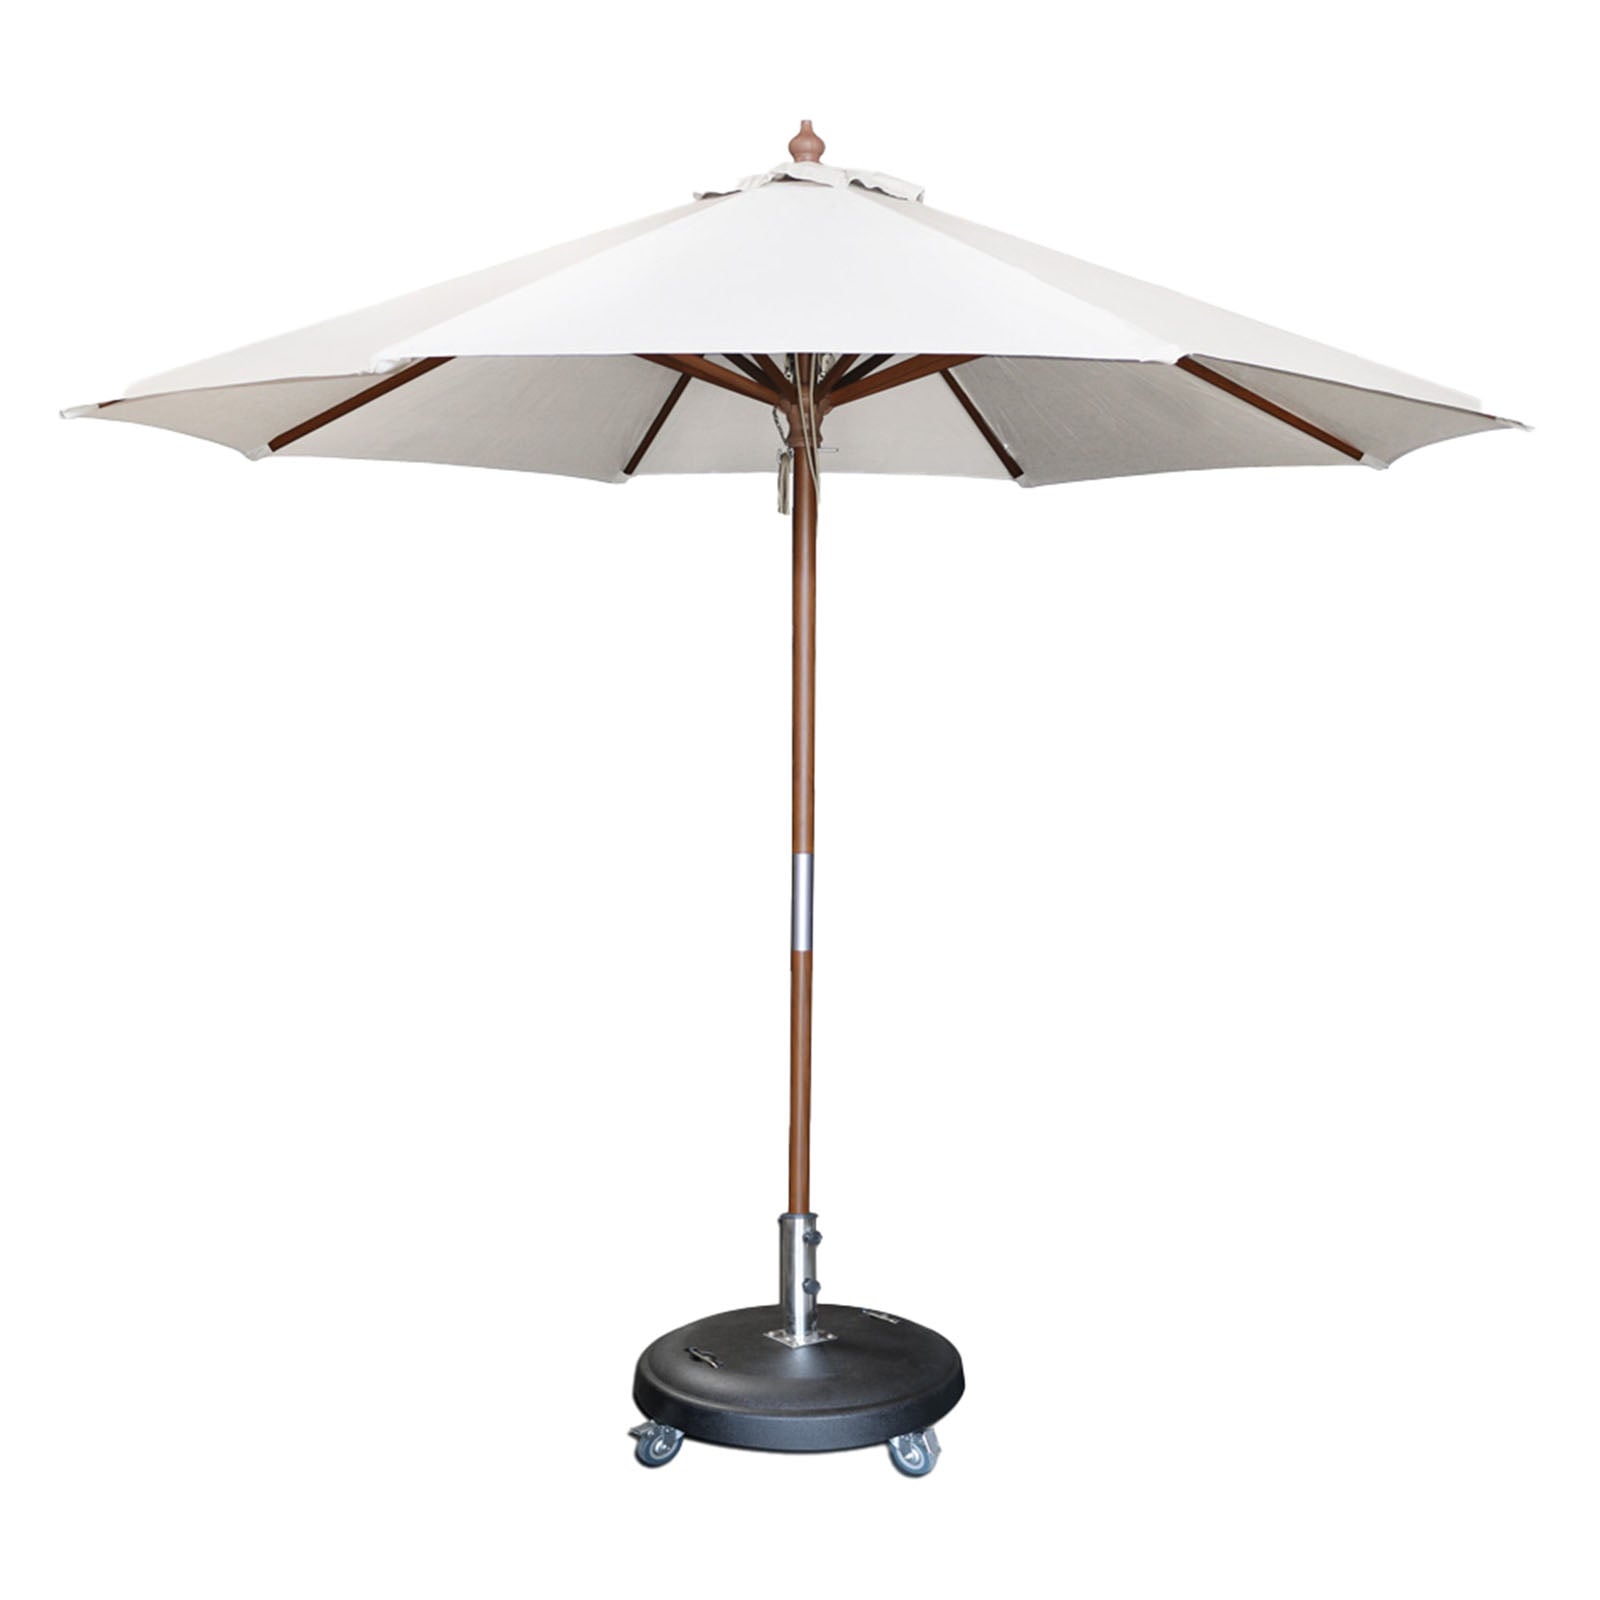 Design Warehouse Dixon Sunbrella Round Market Umbrella White 126322 126352 126349 126323